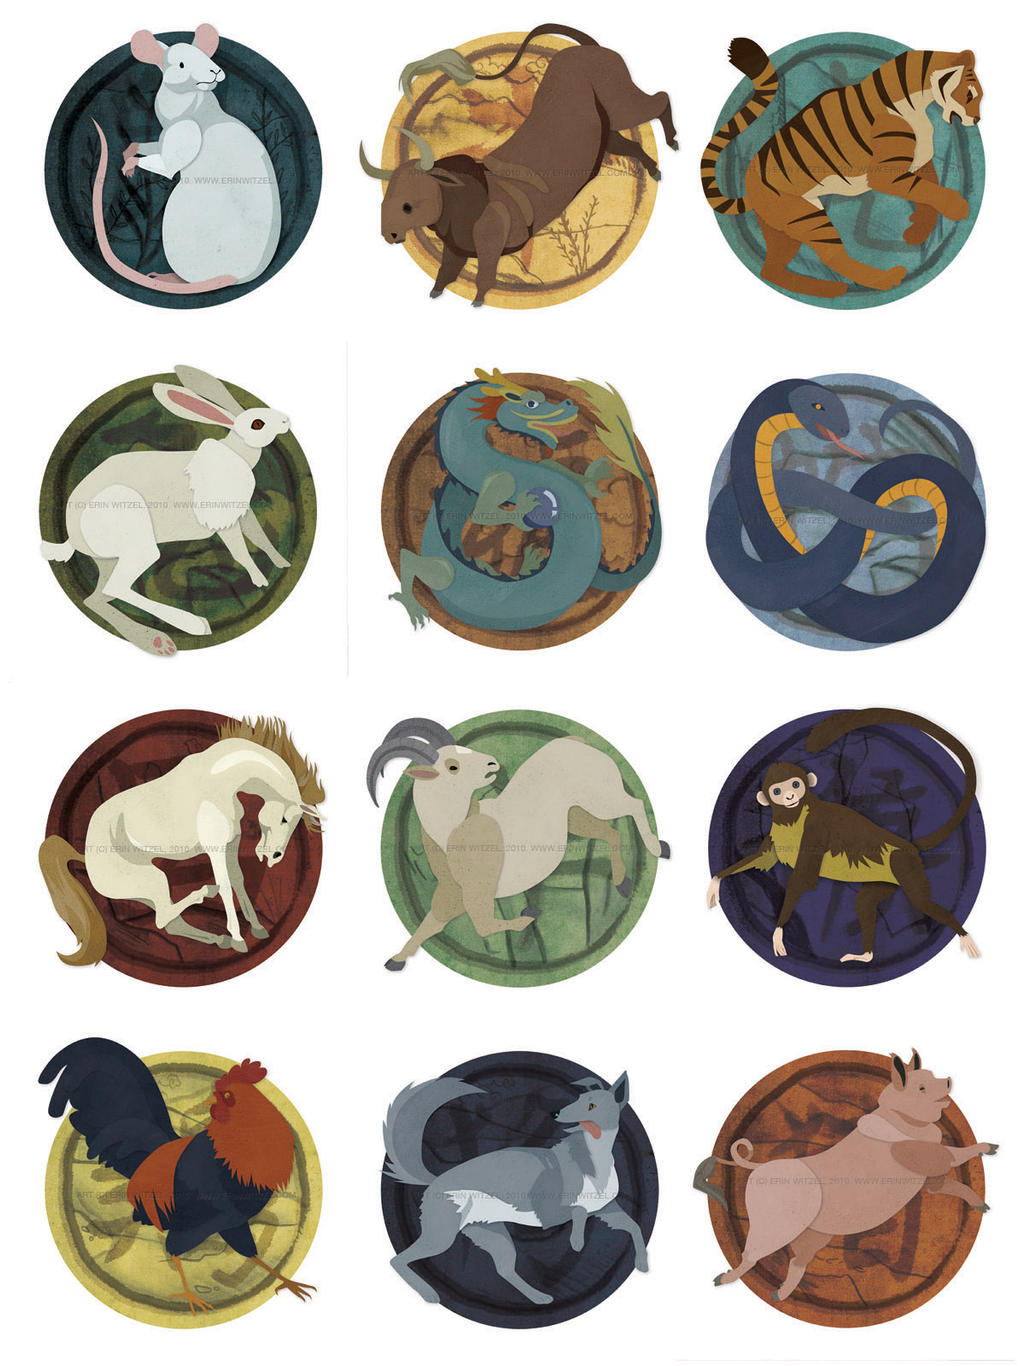 12 Chinese Zodiac Signs by erinwitzel on DeviantArt